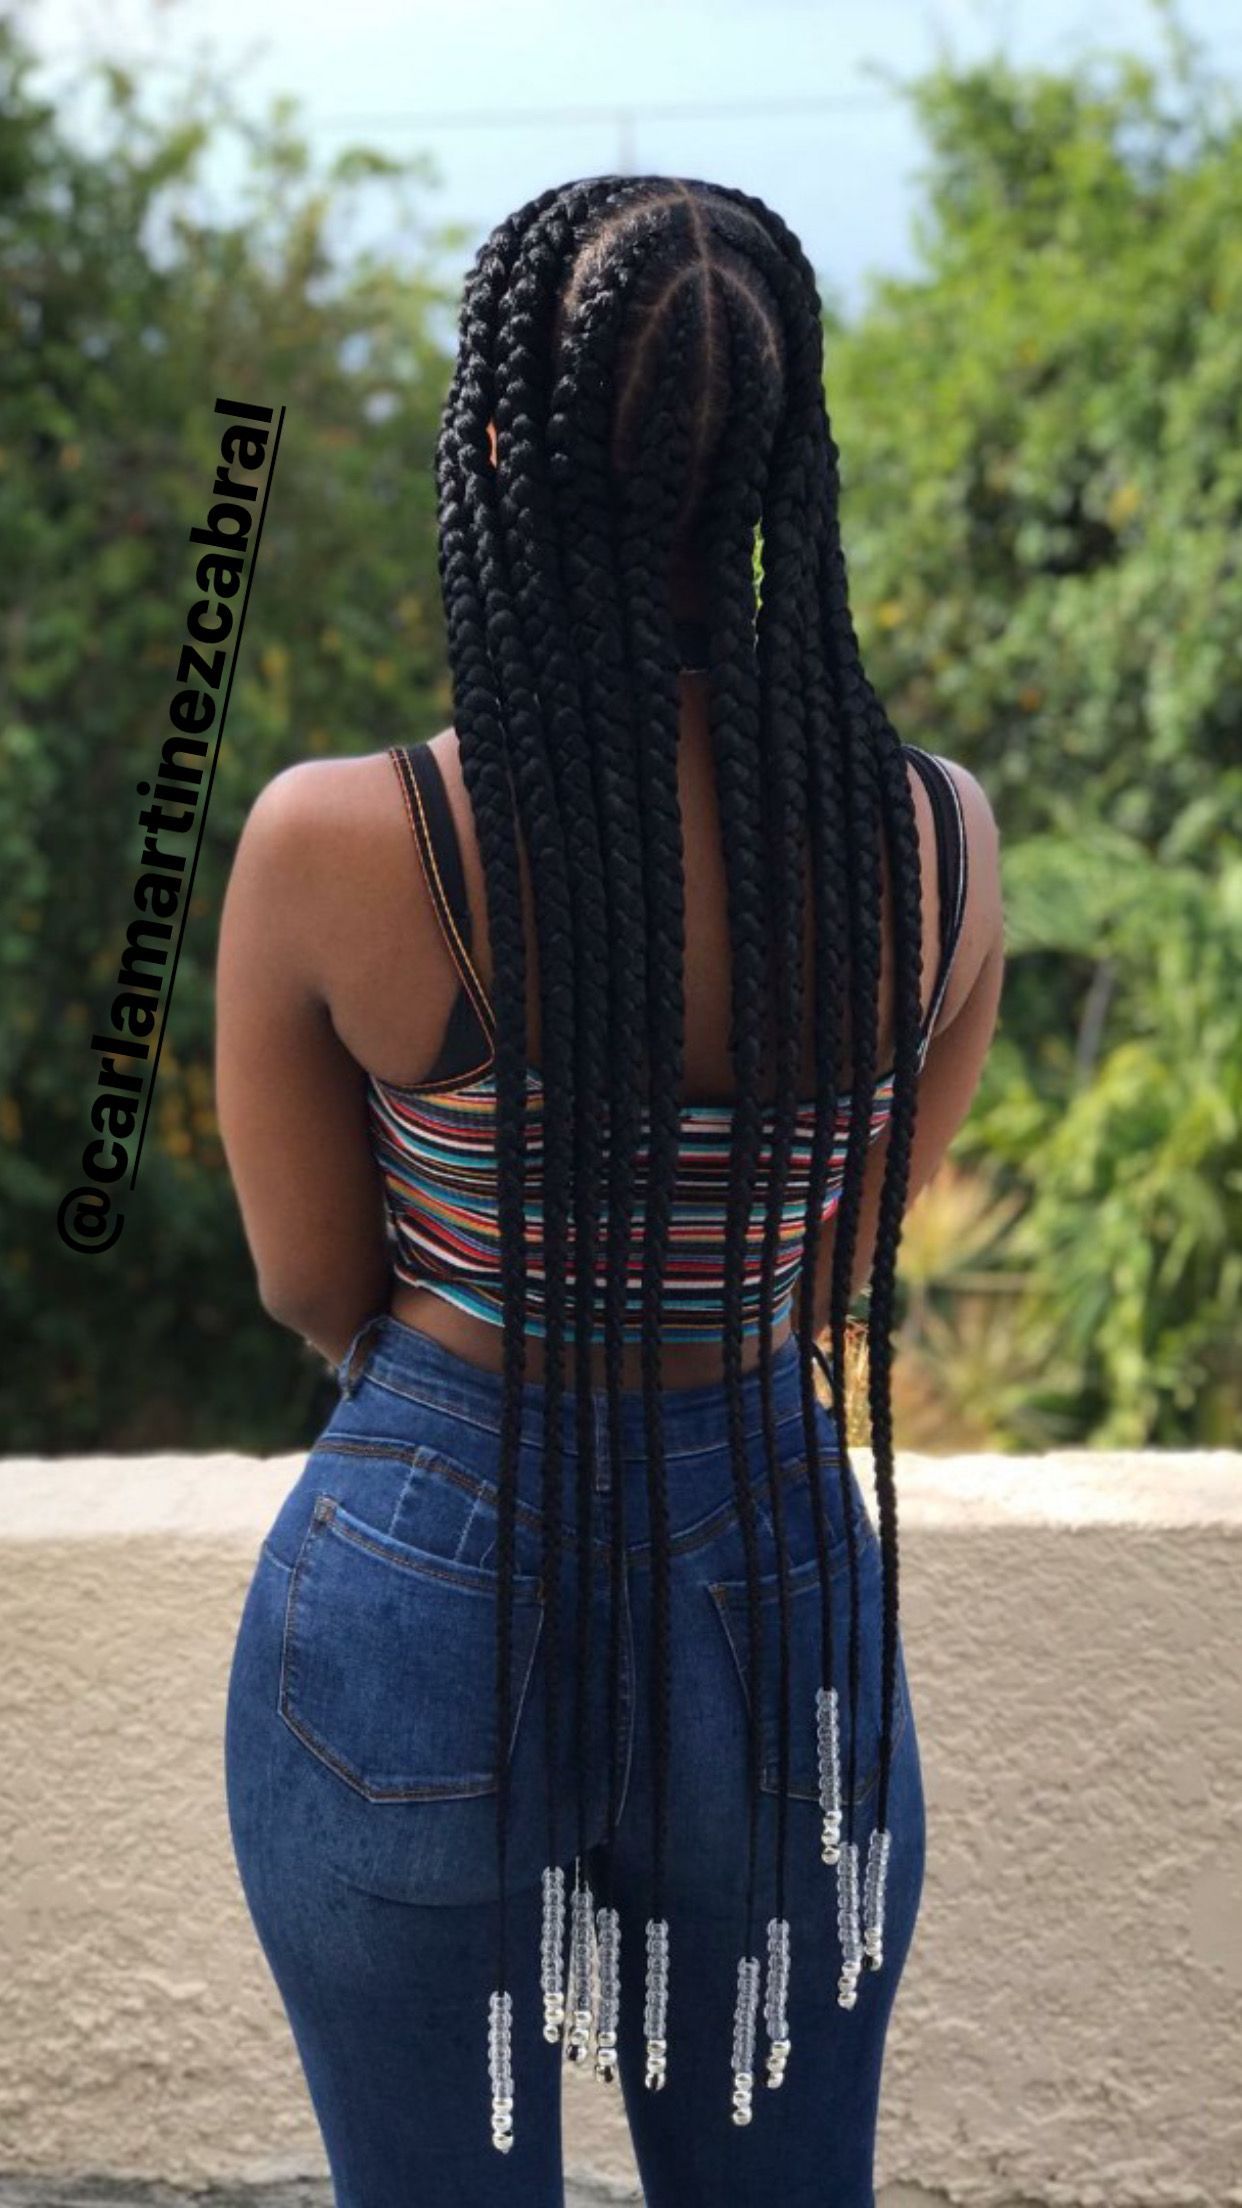 Trending Ghana Weaving 2020: Beautiful Braiding Hairstyle Trends You